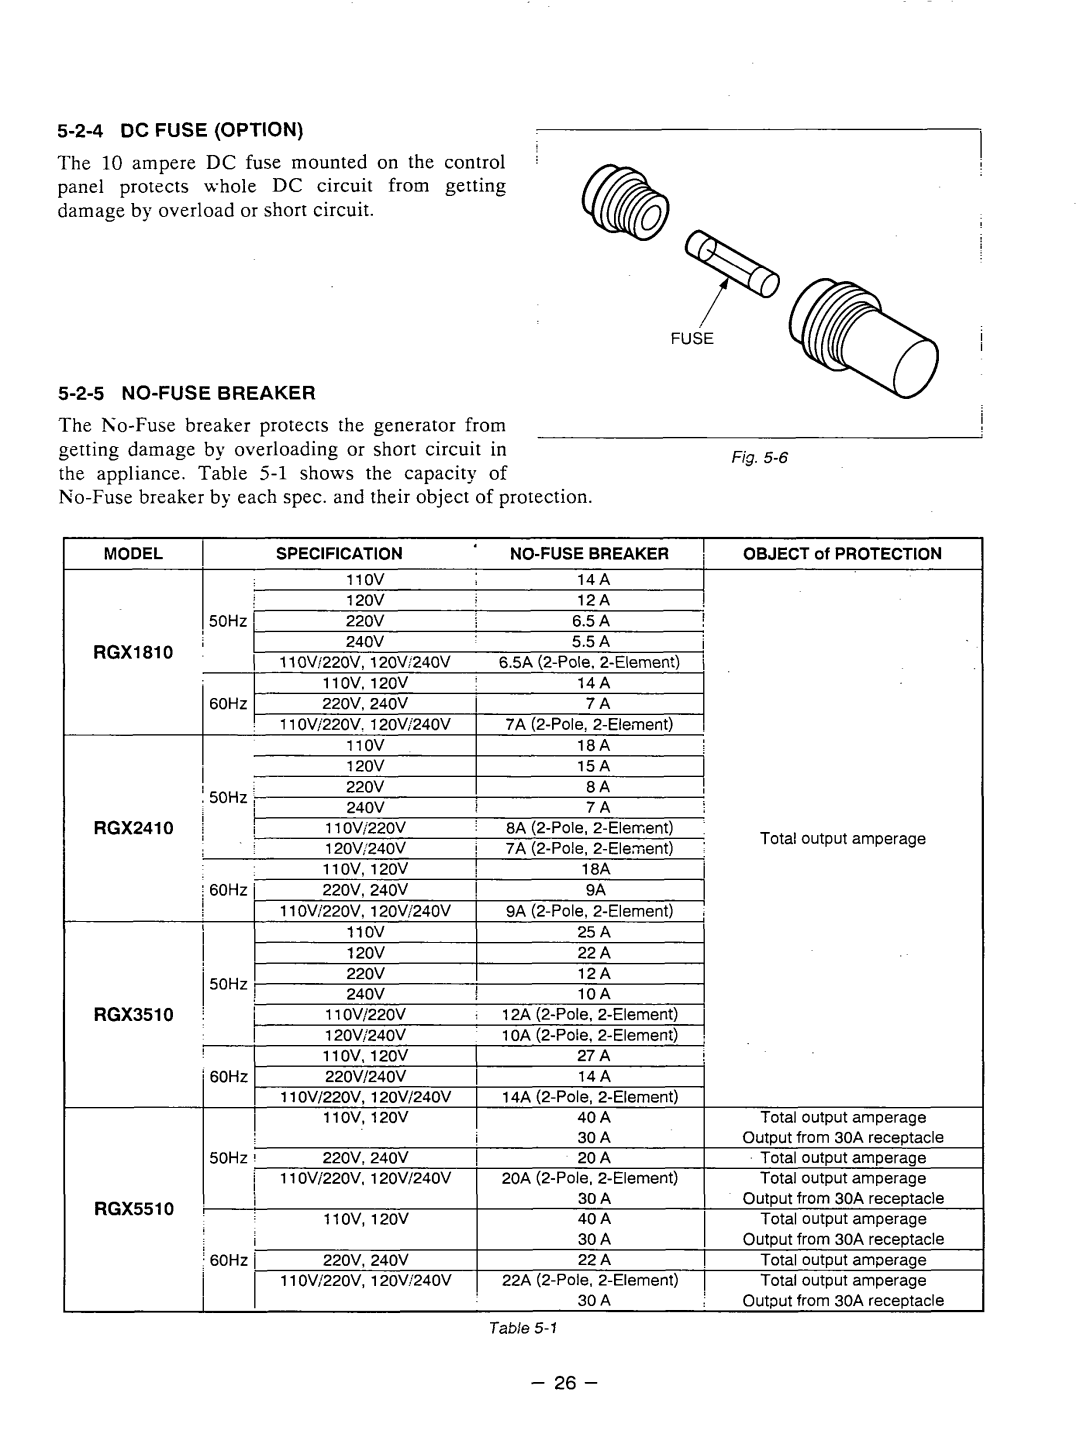 Subaru Robin Power Products RGX3510 Dc Fuse Option, No-Fusebreaker, RGX55 0 r, llnv 17nv, RGX1810, RGX2410, 5.5A, zzuv 